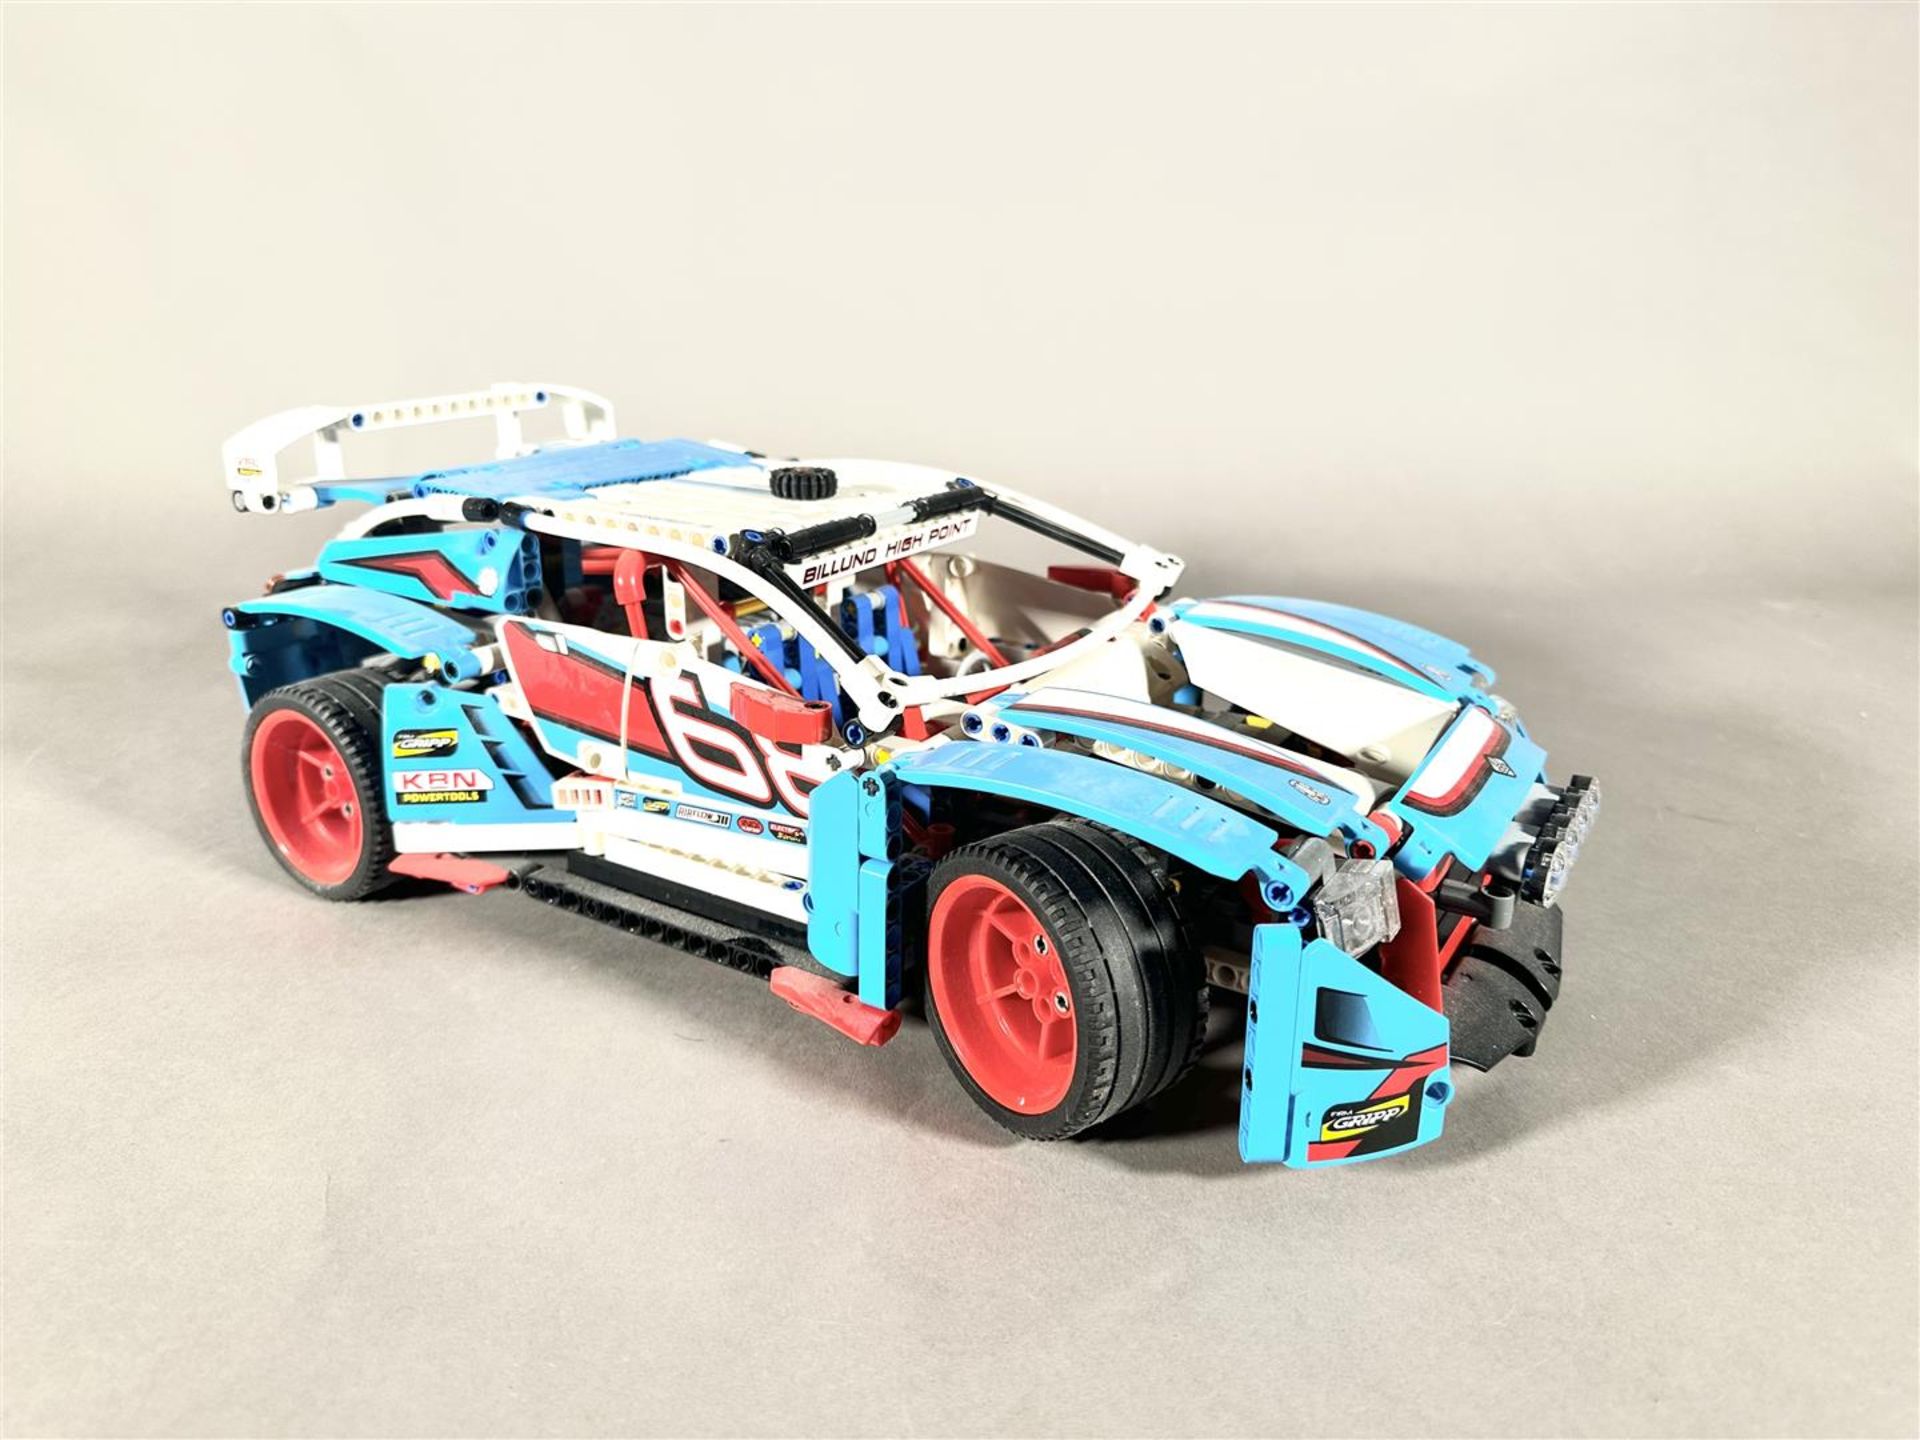 Lego - Technic - 42077 - Car rally car - 2000-present - Netherlands - Image 6 of 6